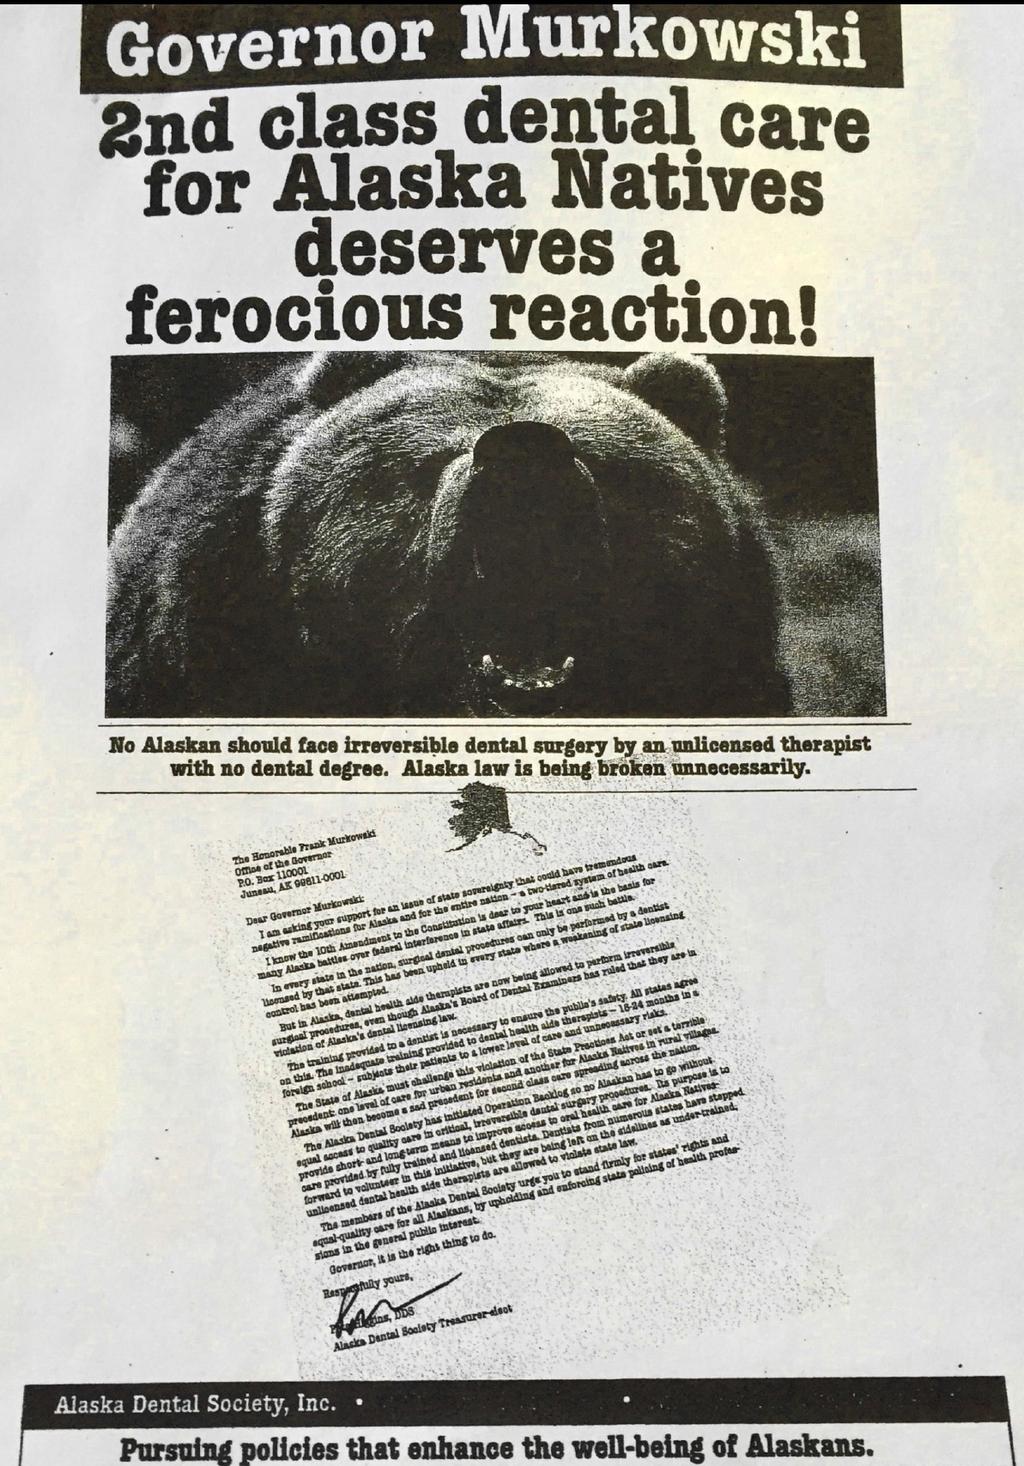 Appendix 1: Alaska Dental Society Newspaper advertisement, 2 nd